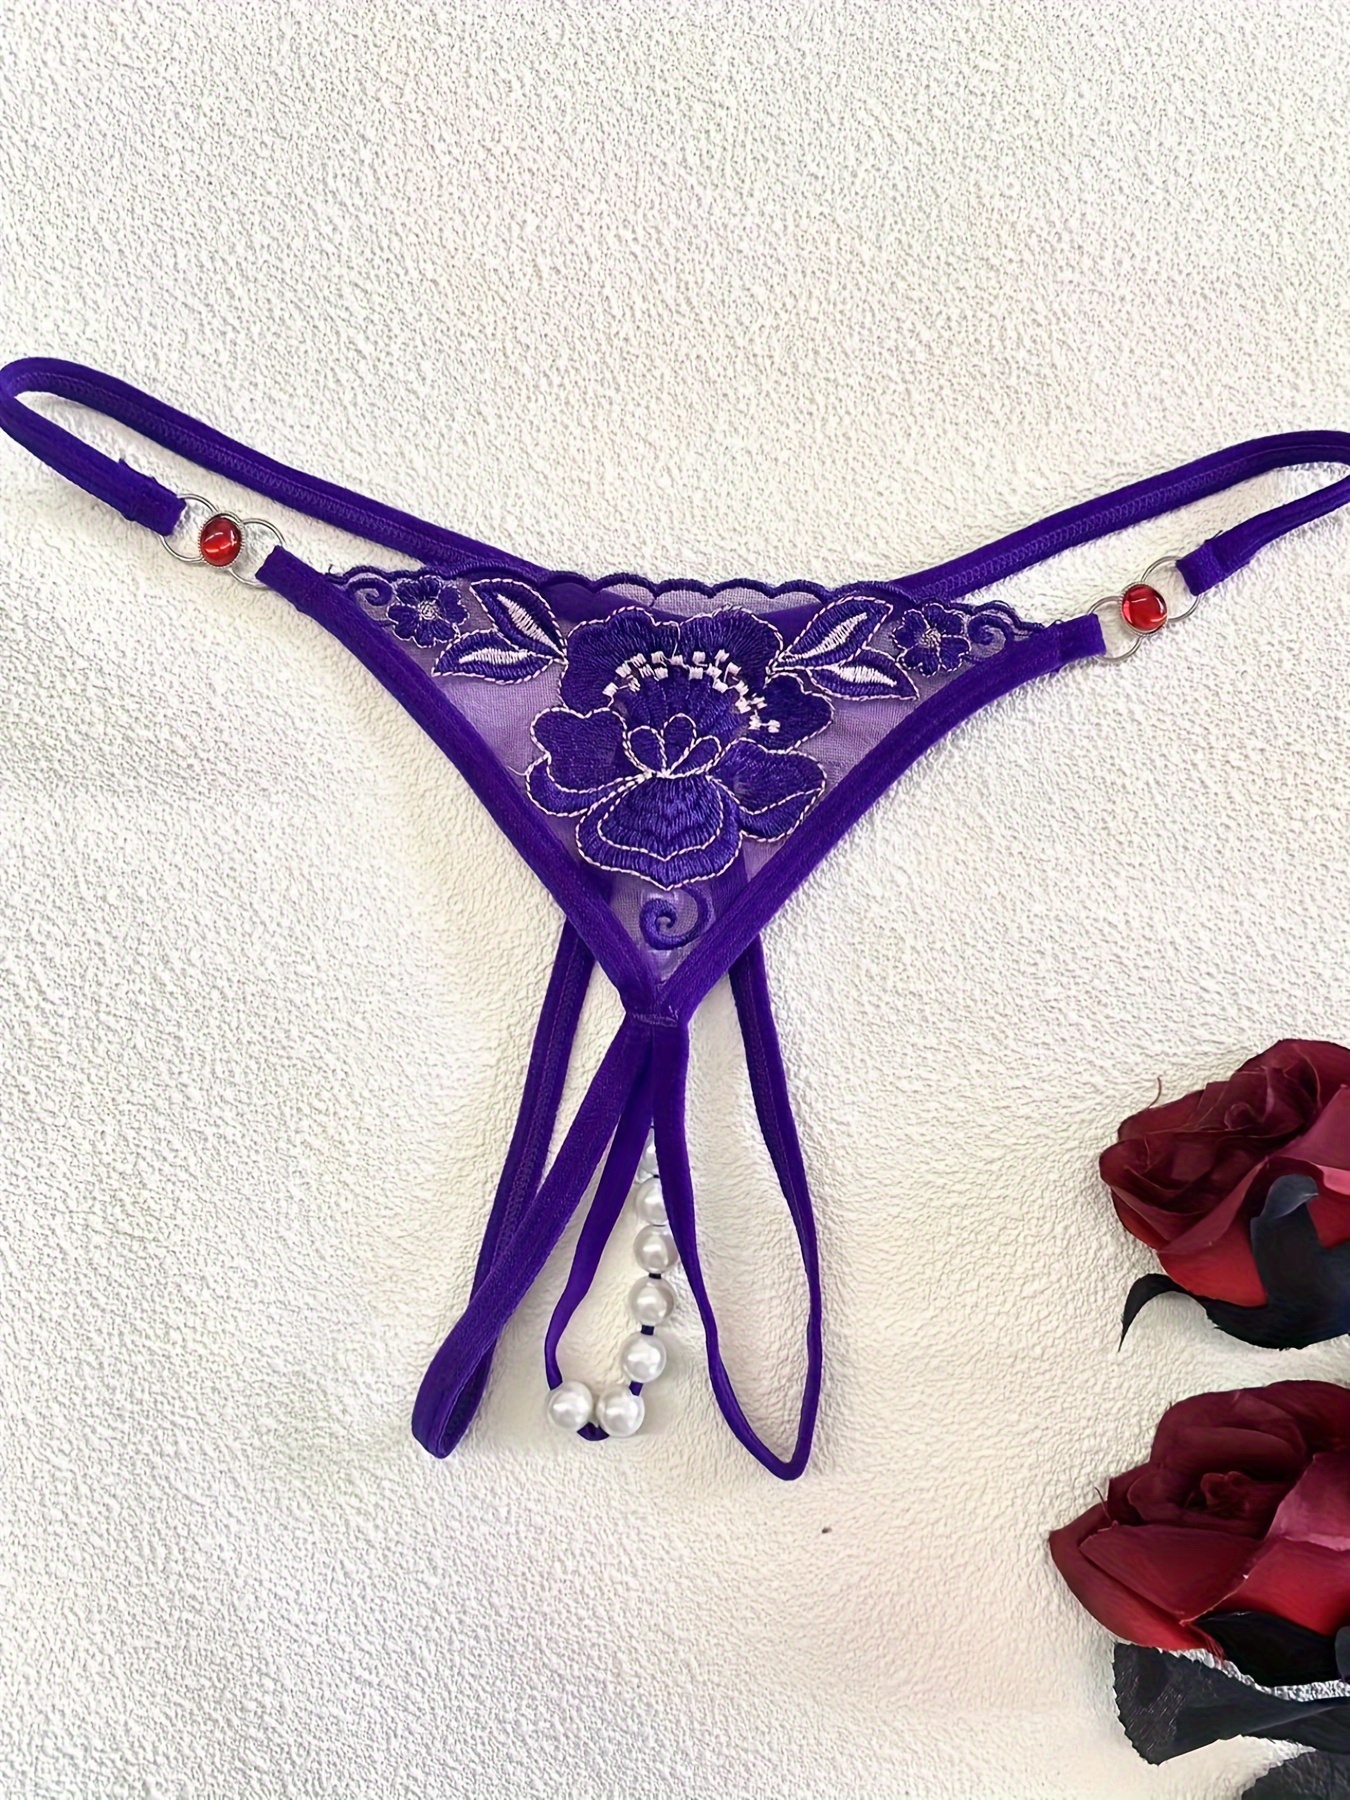 ZZMMSSGG Embroidery Flower Pearl Panties Open Crotch Love Heart Transparent  Thongs Underwear For Women Lingerie : : Fashion